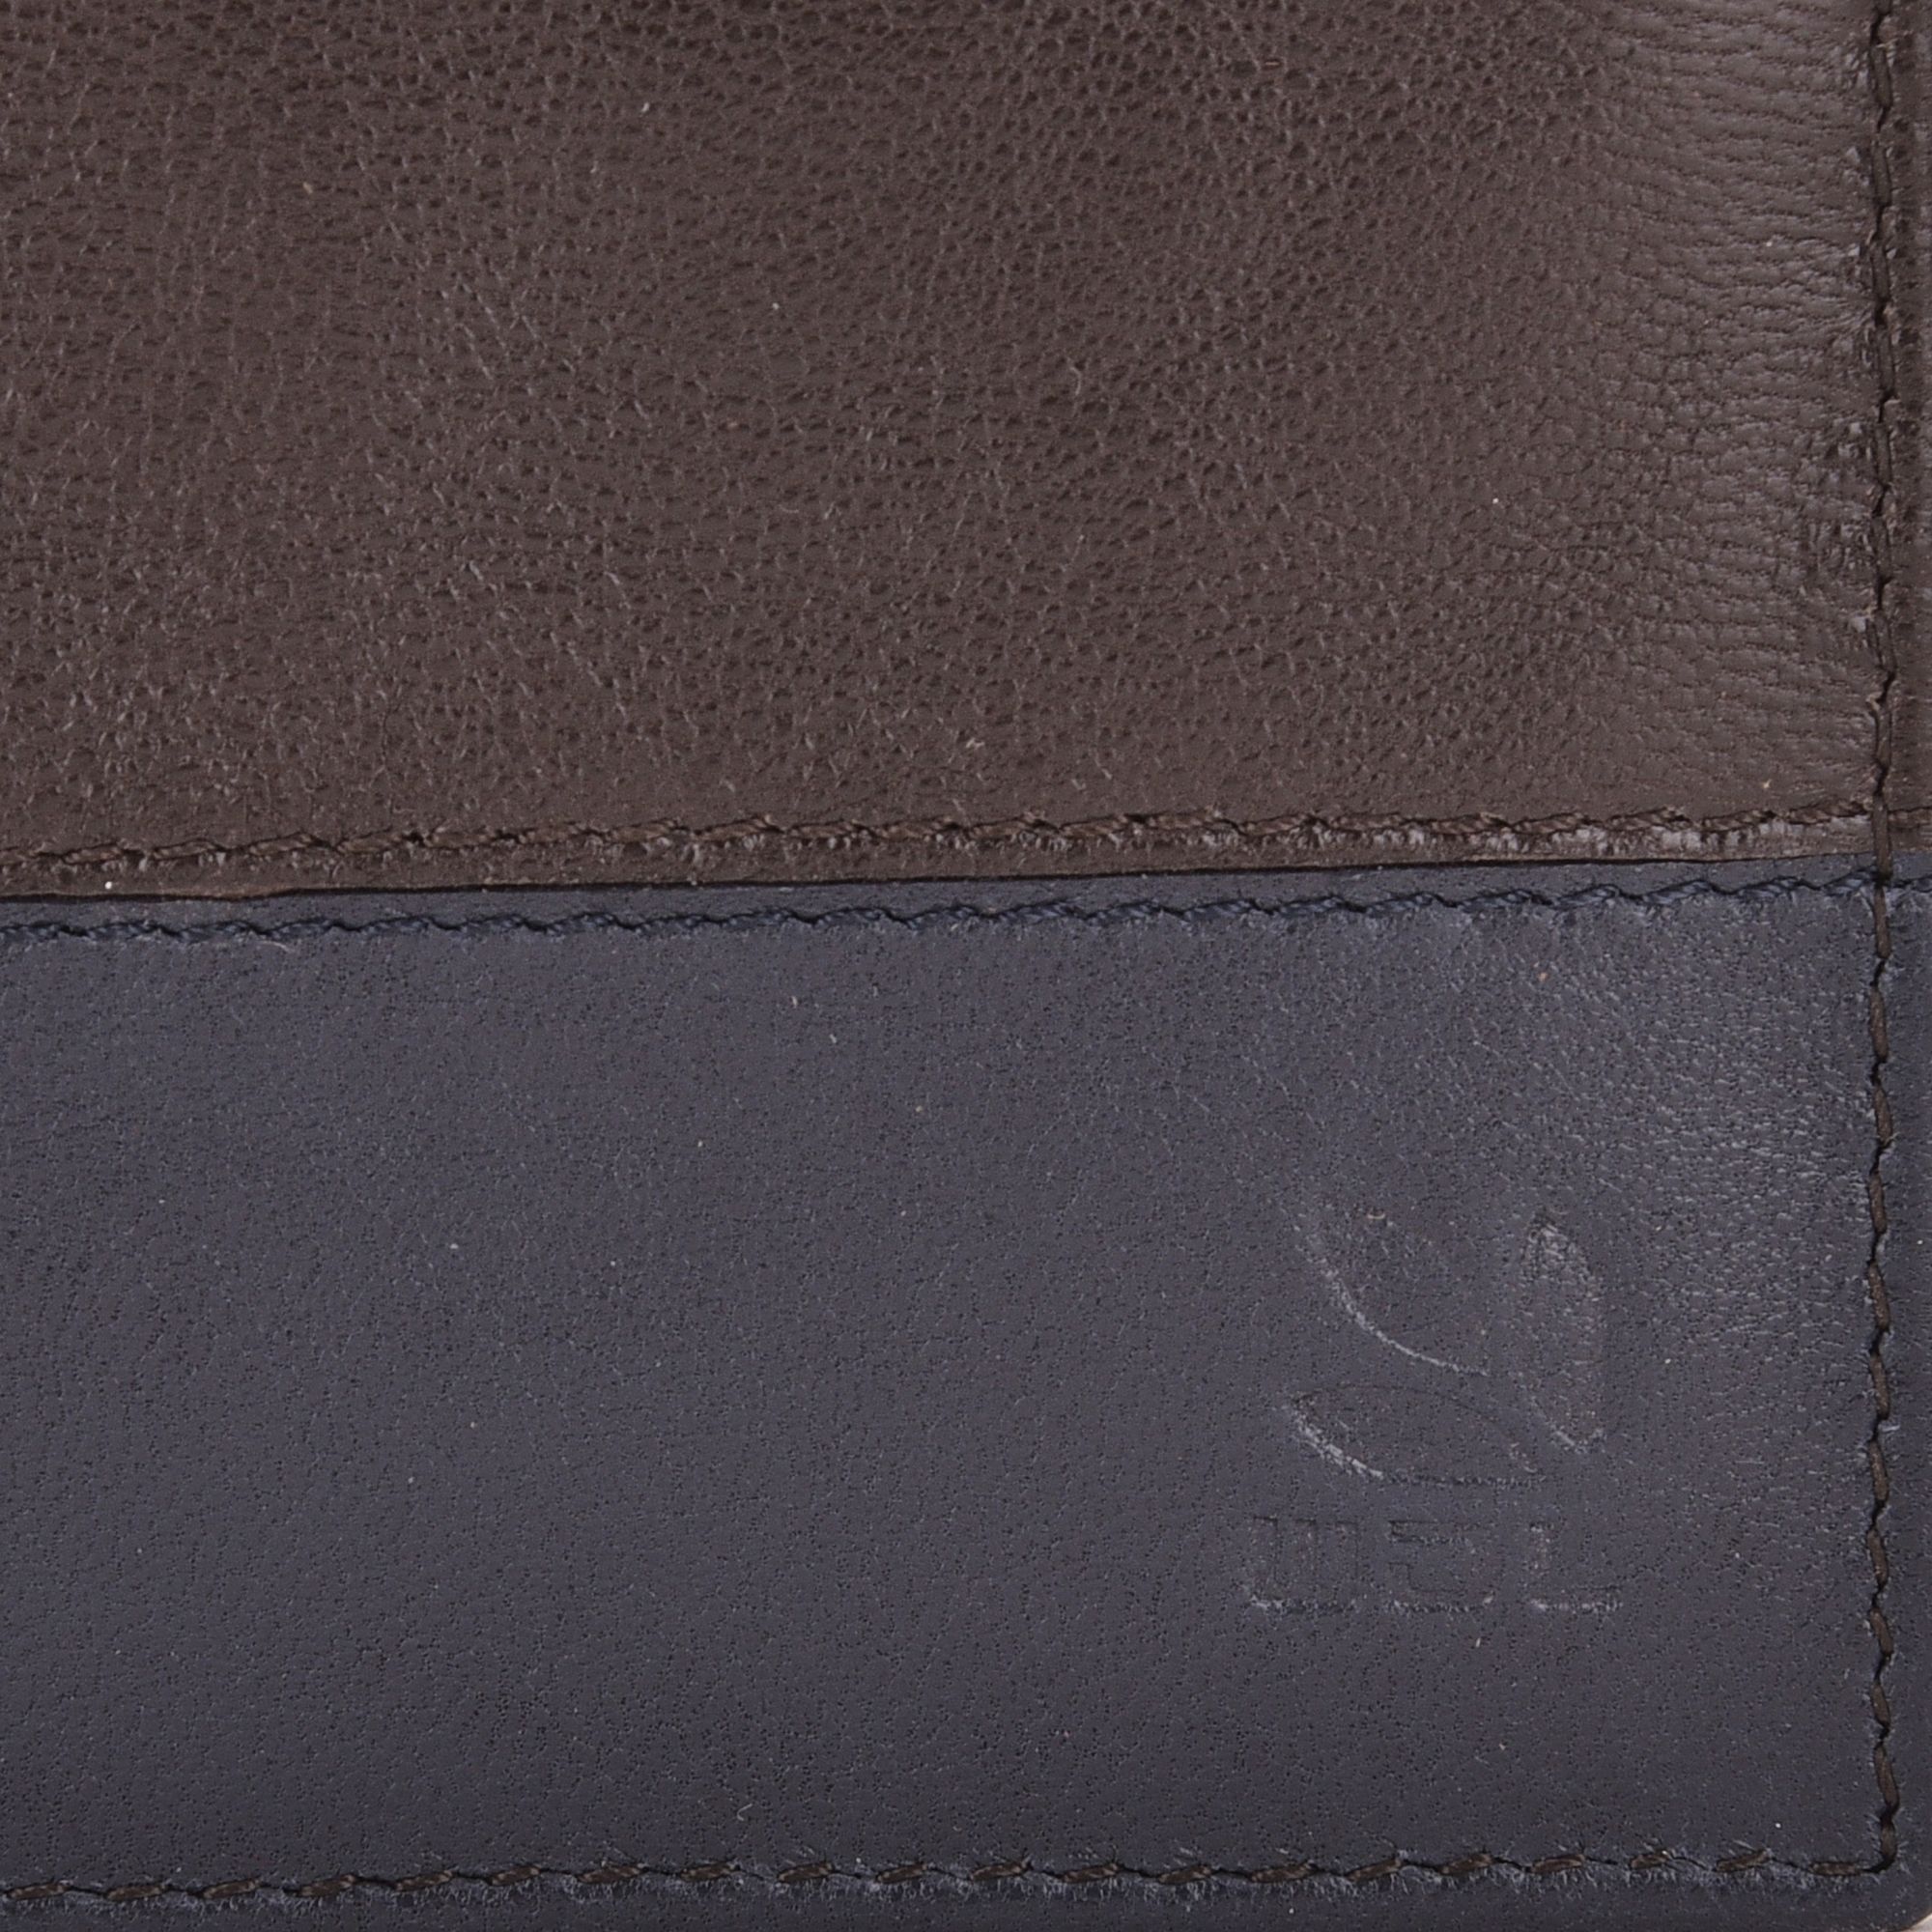 Woodland Tooled Leather Bag – OMNIA